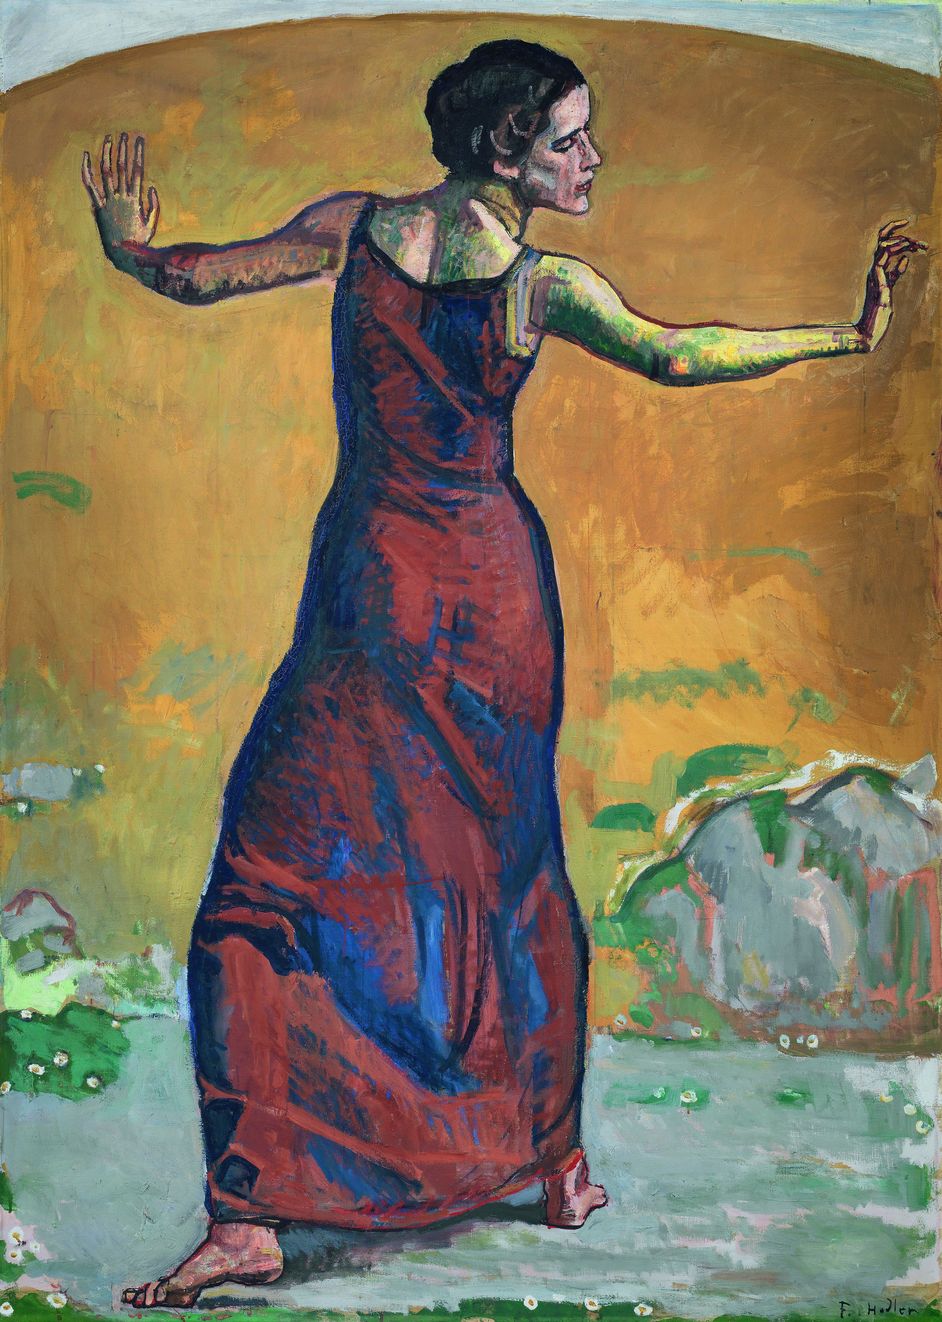 Oil on canvas, 166 × 118.5 cm